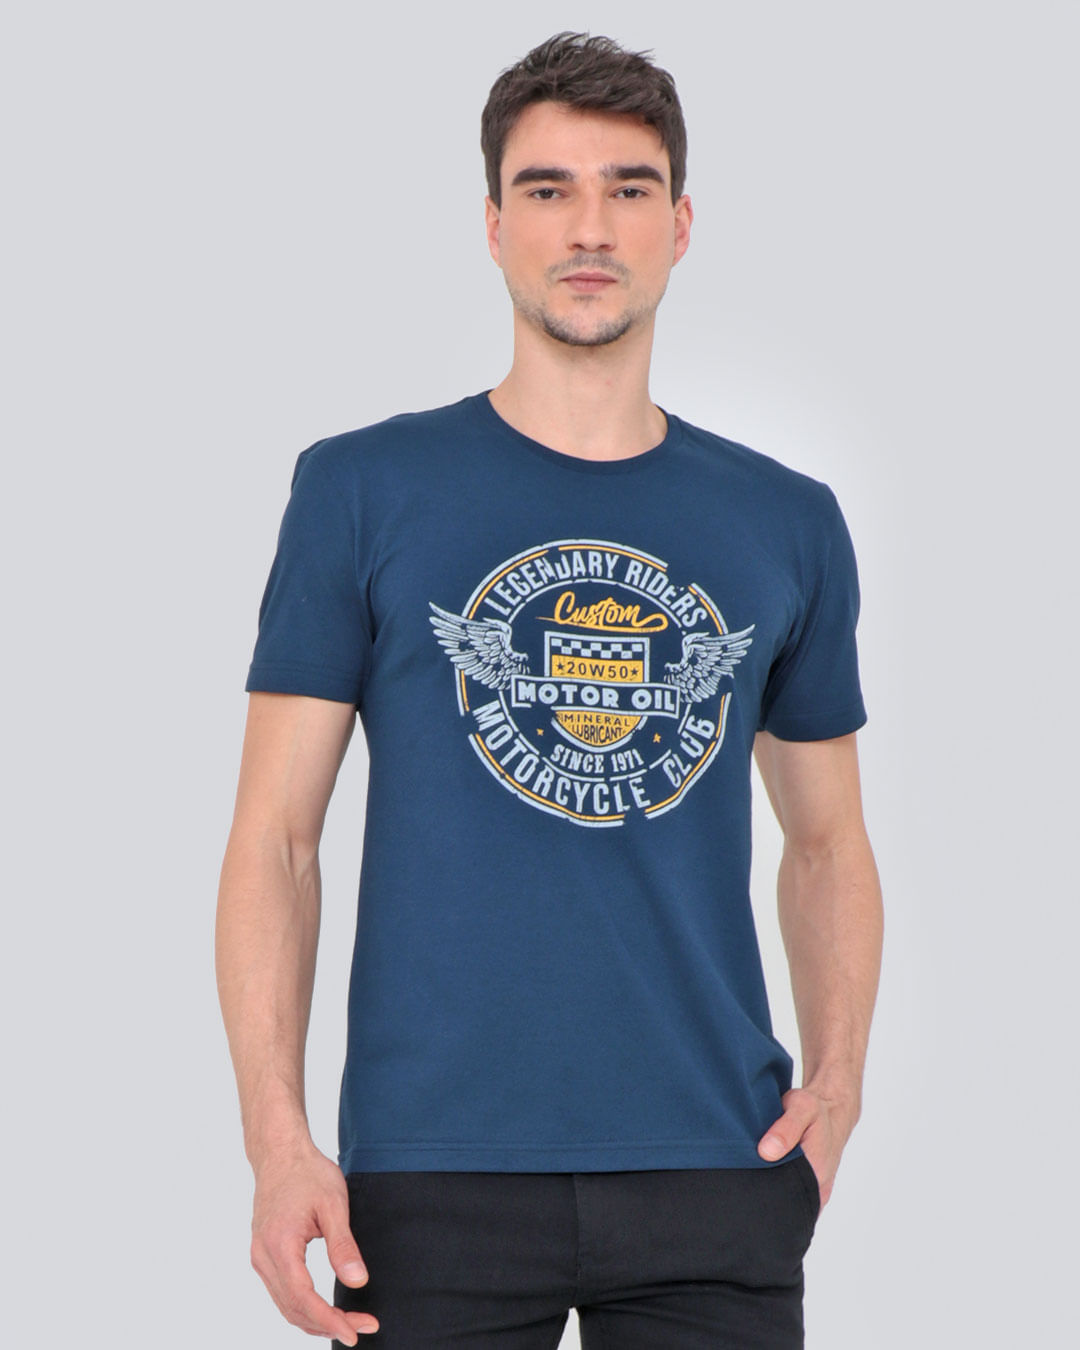 Camiseta-Estampa-Frontal-Azul-Marinho